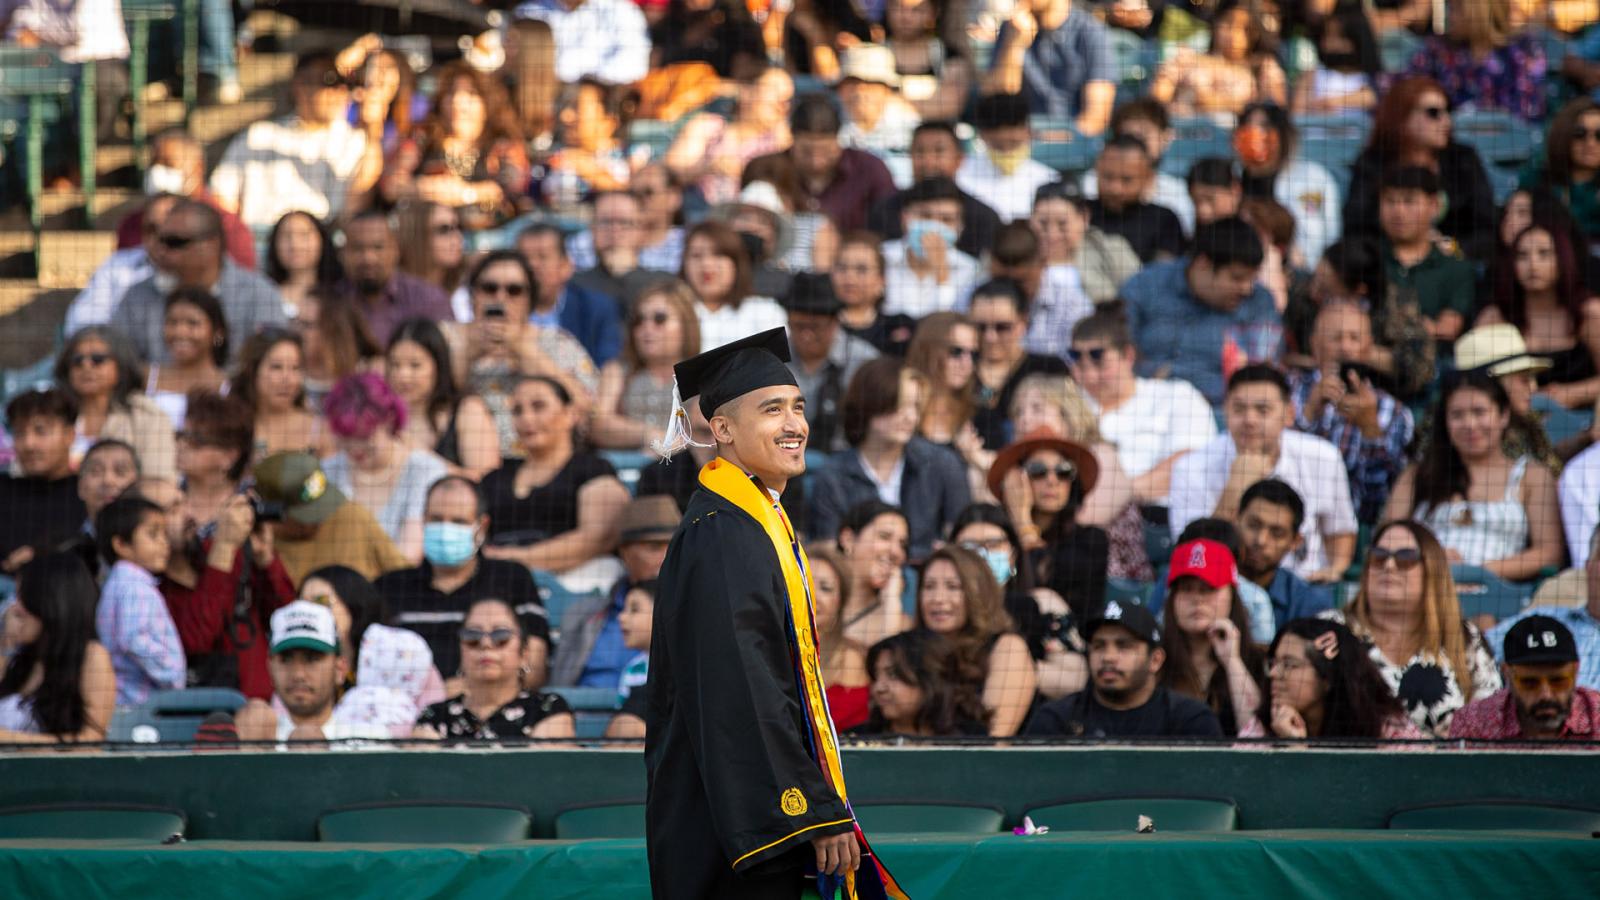 Graduate walks past crowd at Commencement